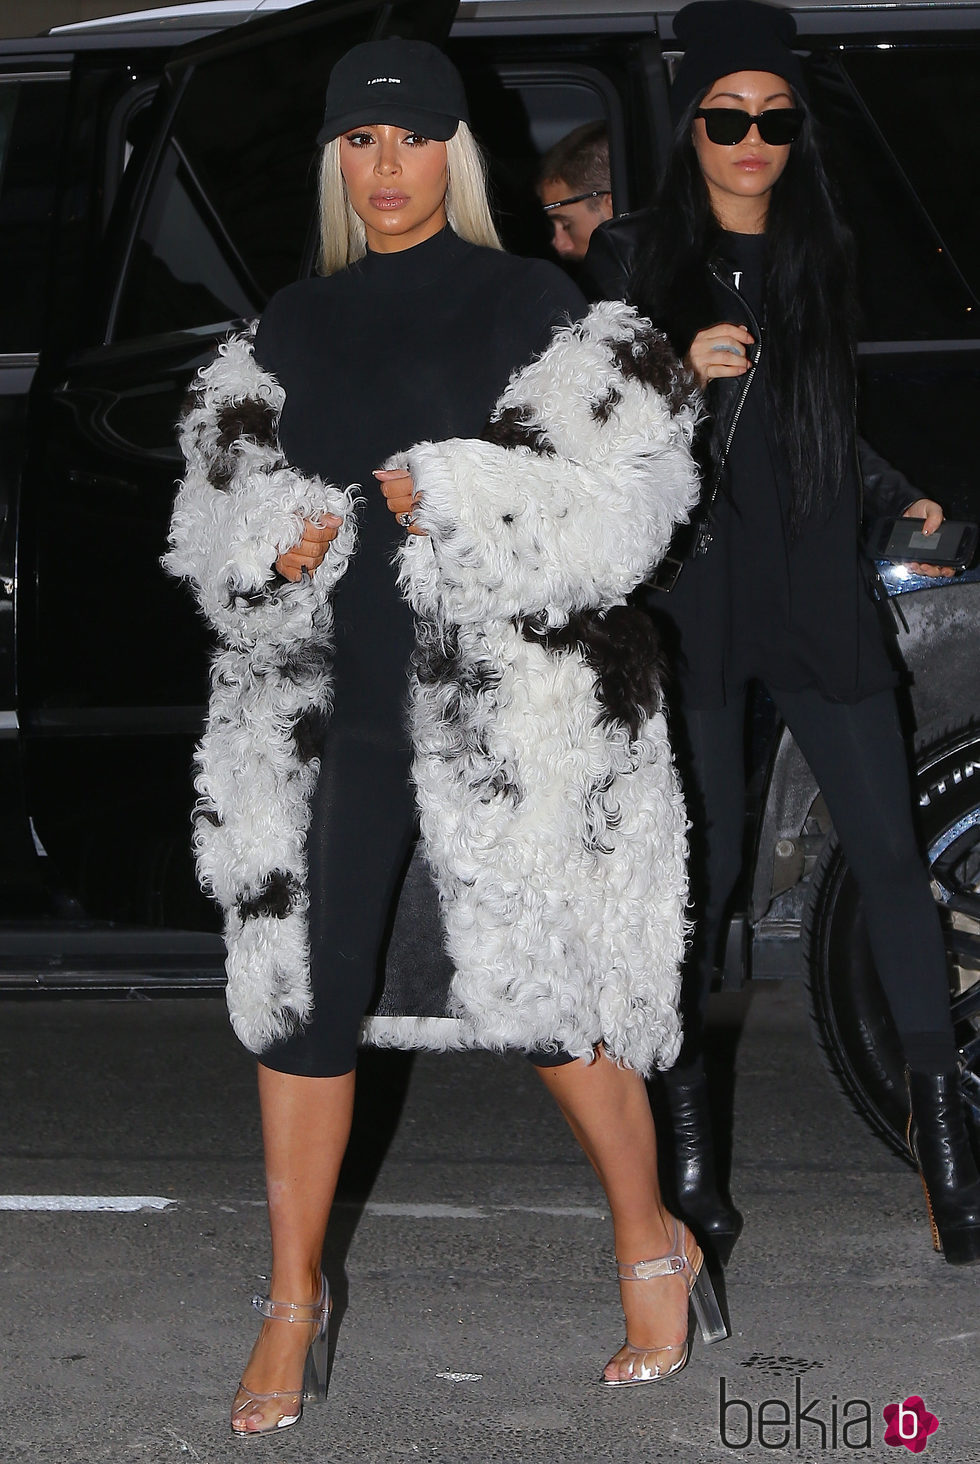 Kim Kardashian, rubia y muy abrigada en Nueva York